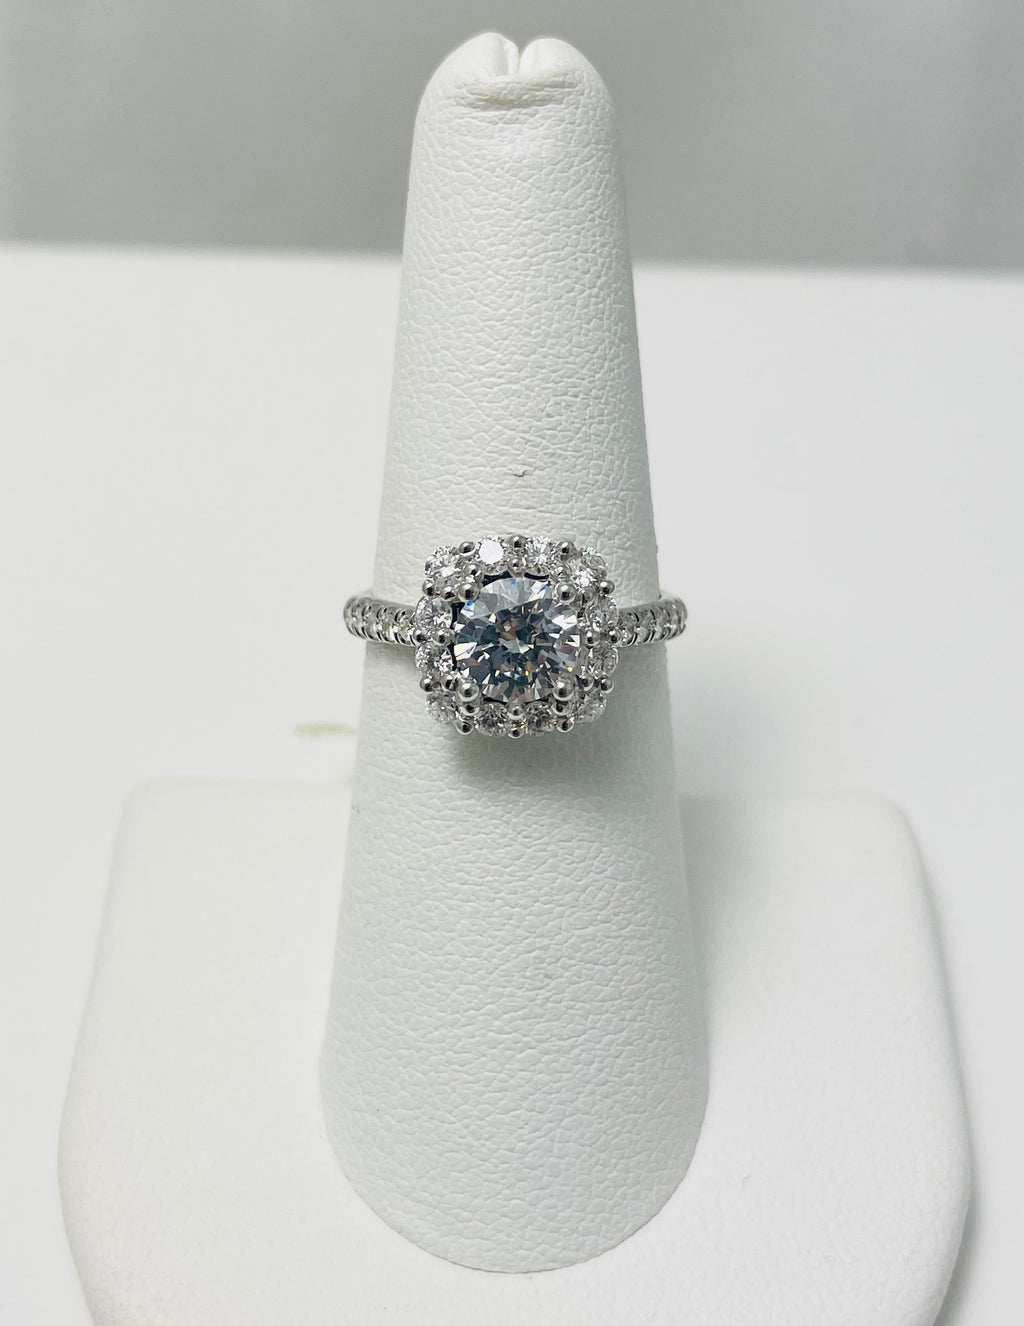 New! Distinctive 14k White Gold Natural Diamond Engagement Ring Mount